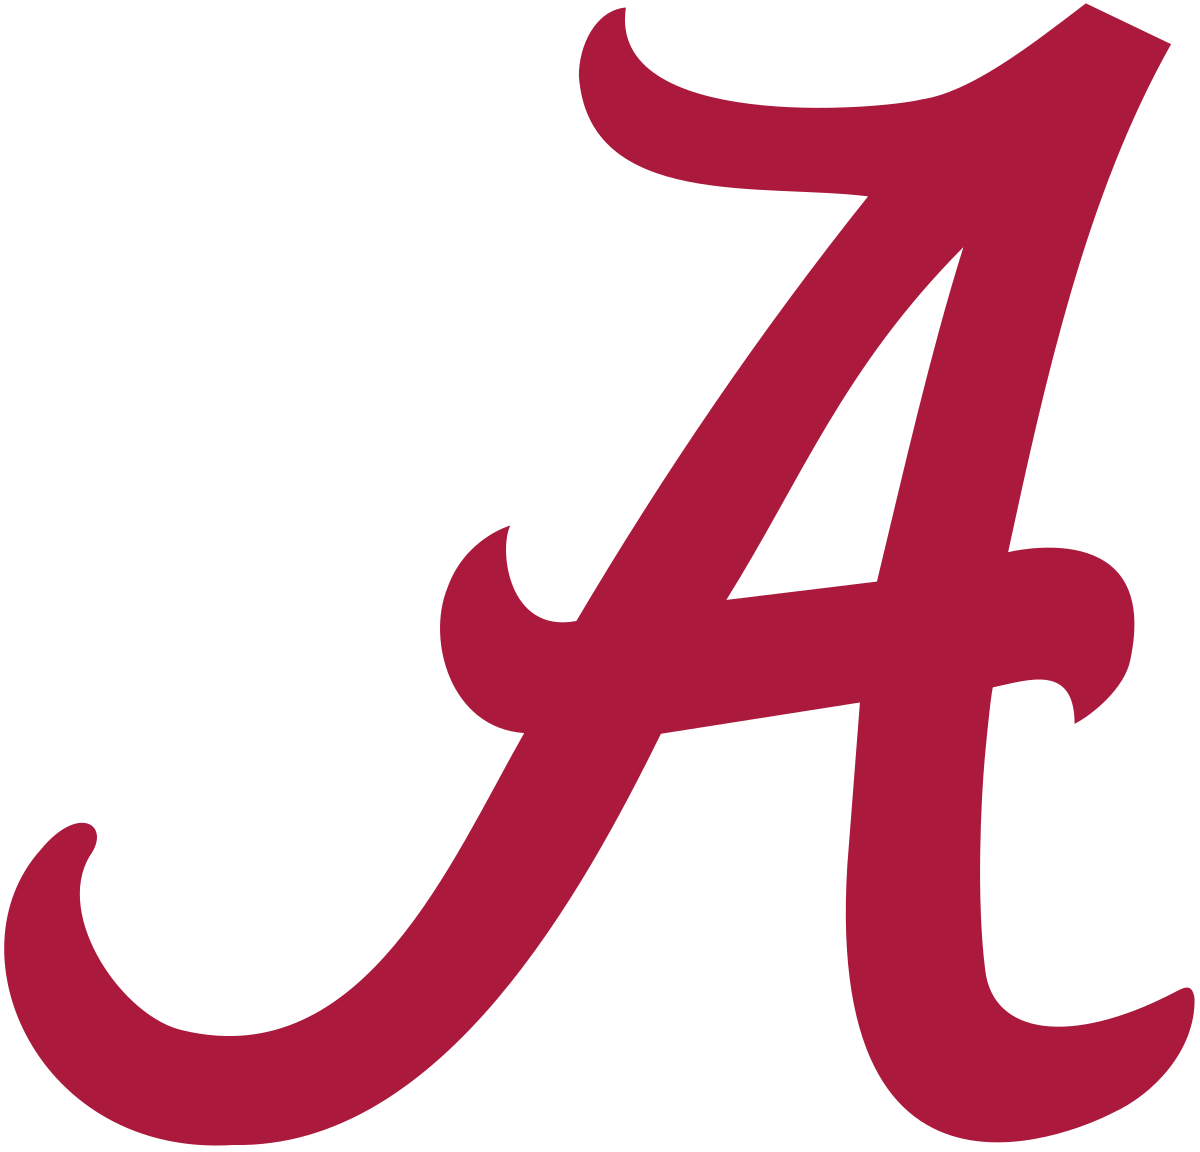 University of Alabama Logo - Alabama Crimson Tide football